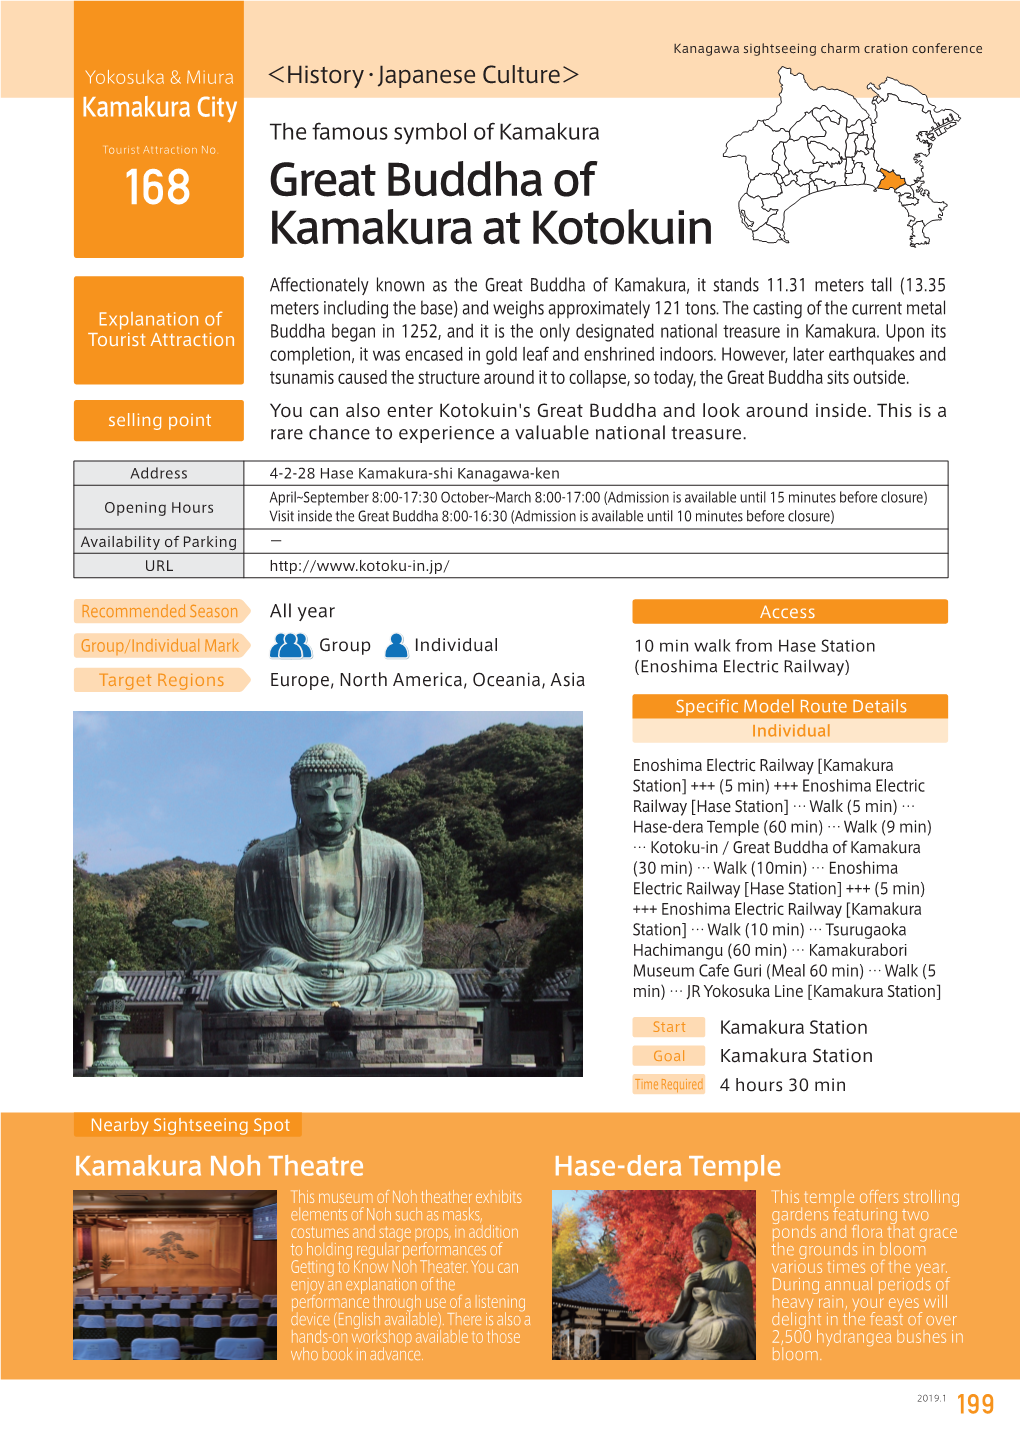 Great Buddha of Kamakura at Kotokuin